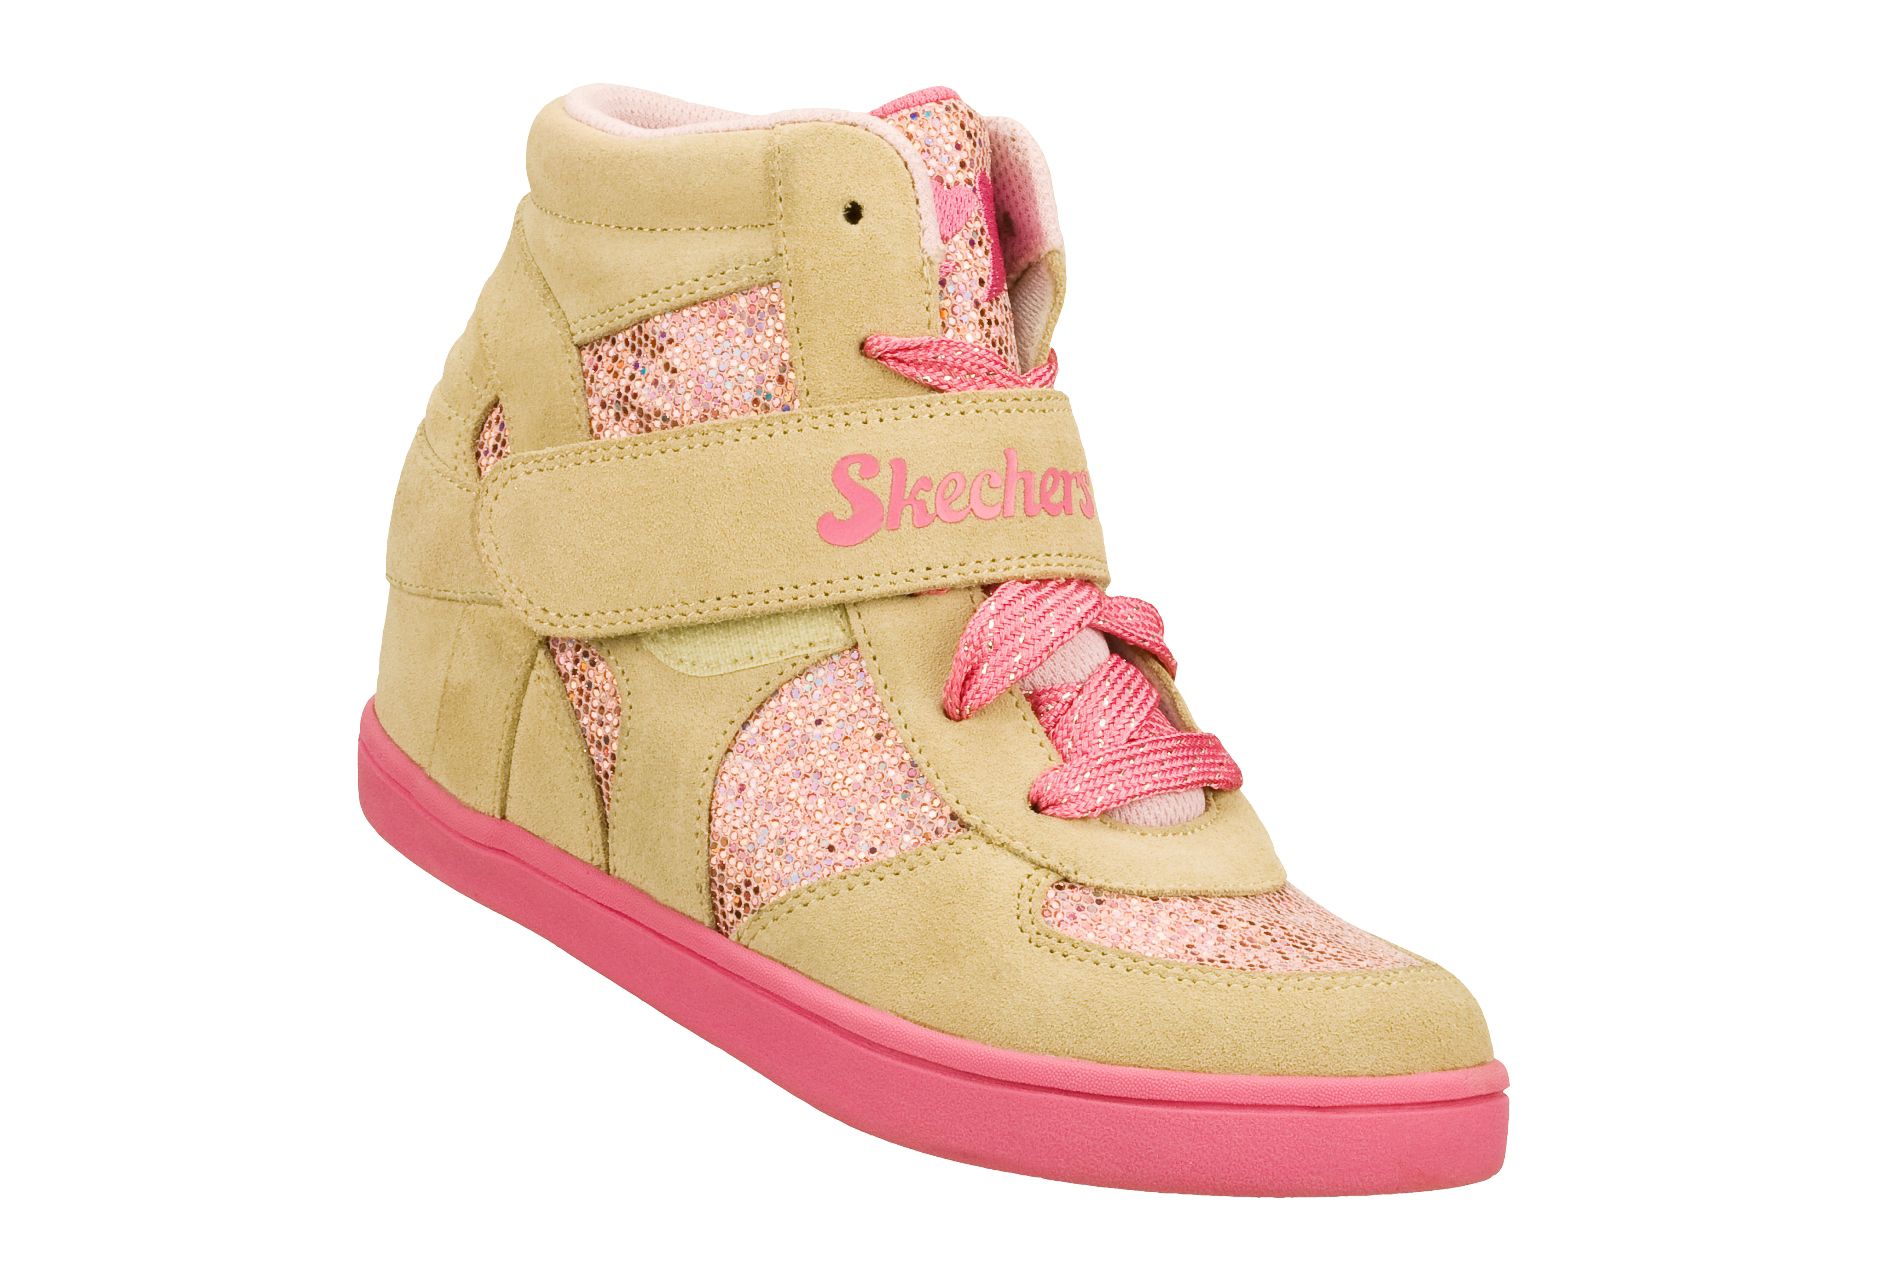 Skechers Girl's Pretty Plus 2 Fashion Wedge Sneaker - Tan/Pink